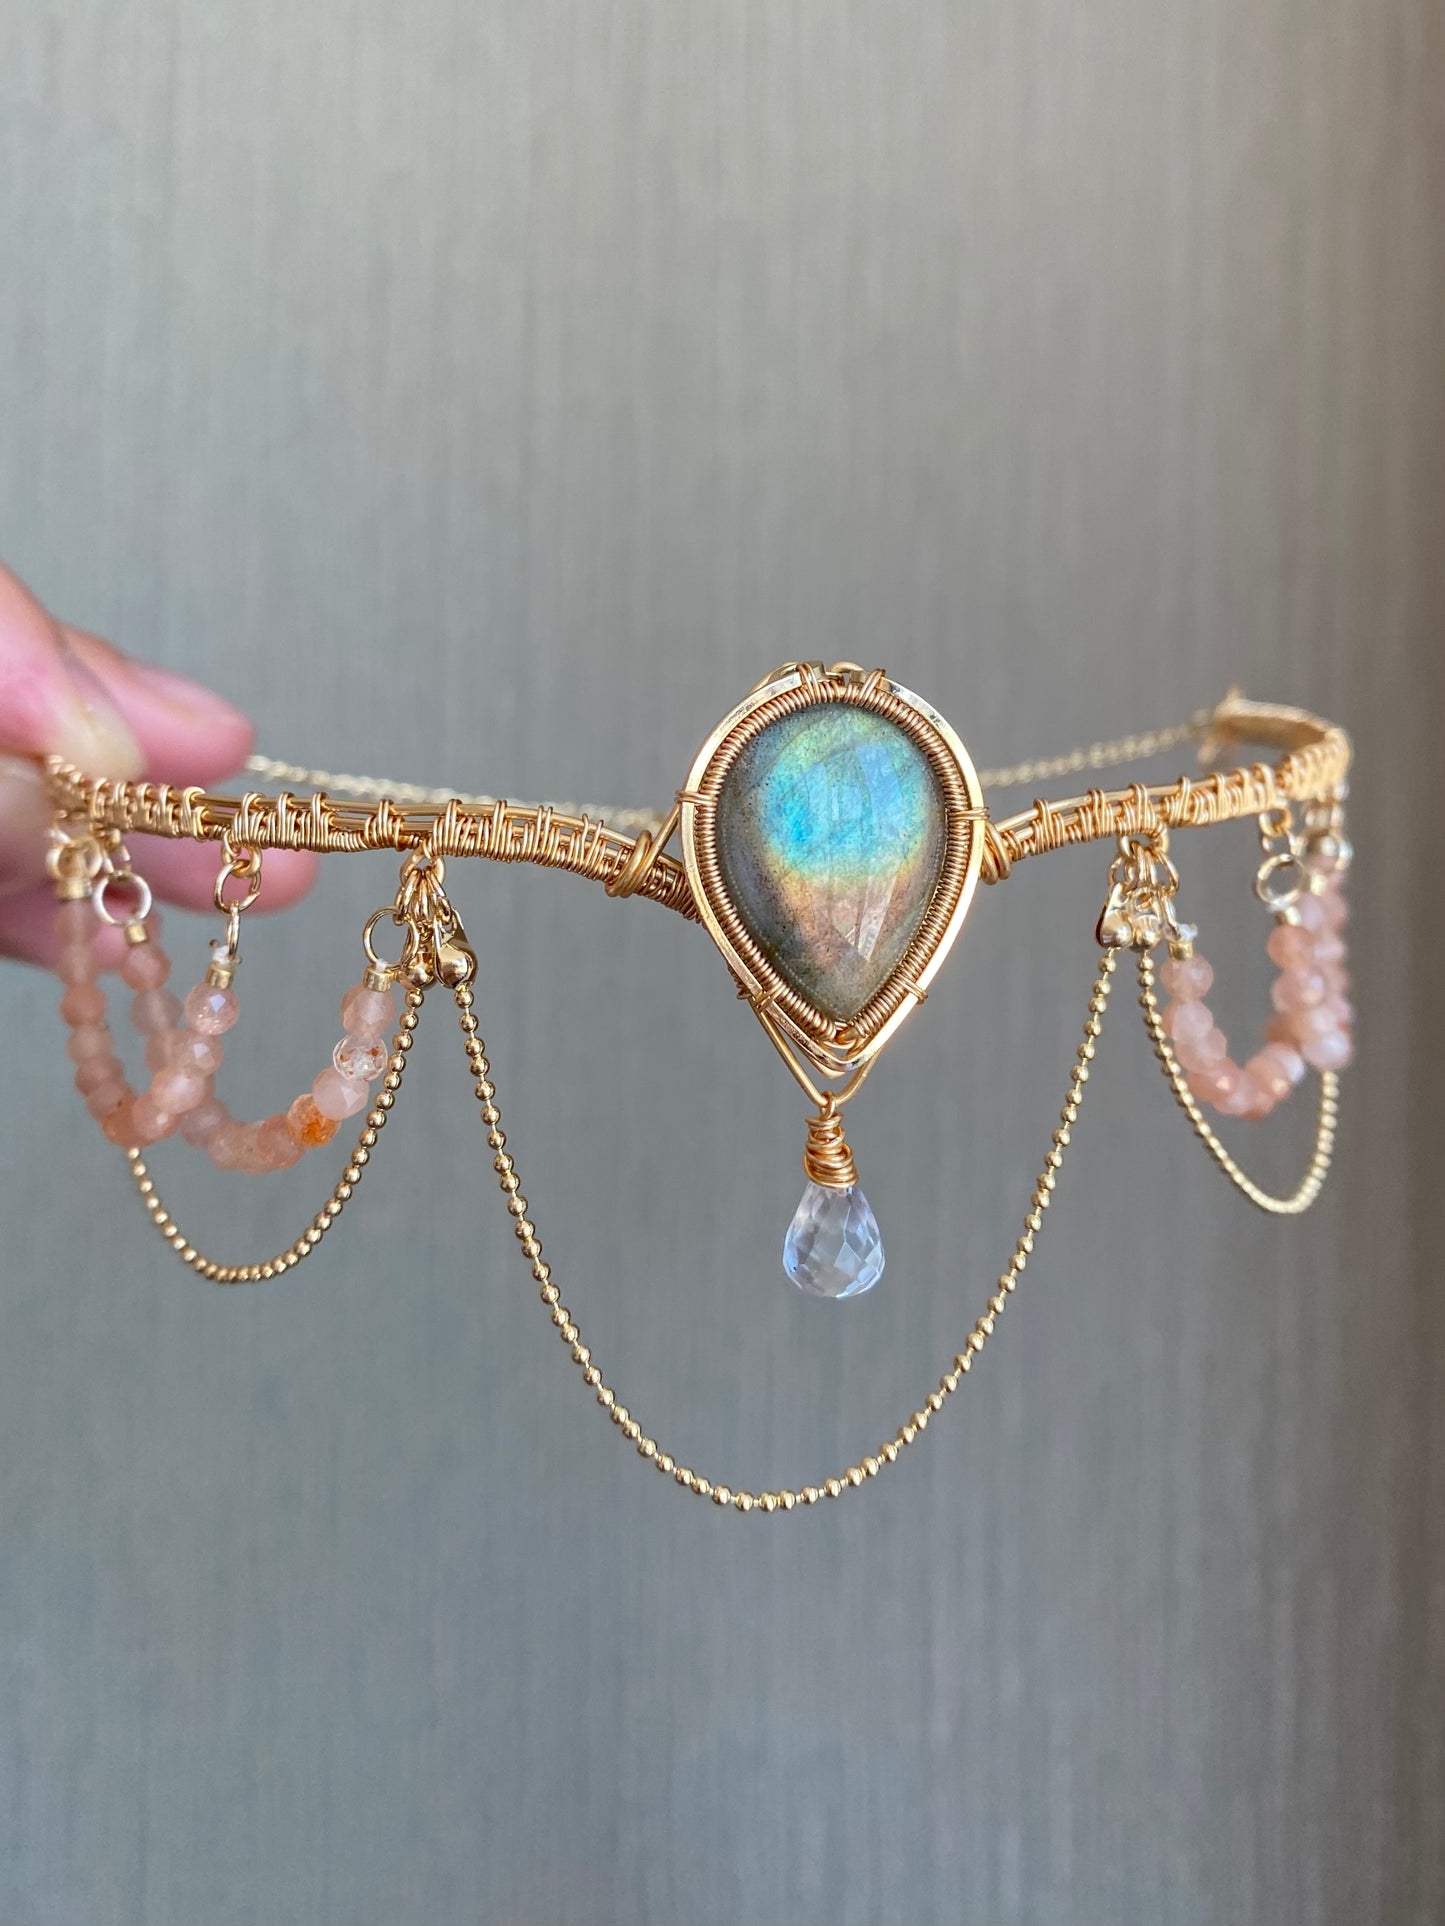 Handmade Labradorite and Peach Moonstone Choker - Wire Wrapped Jewelry